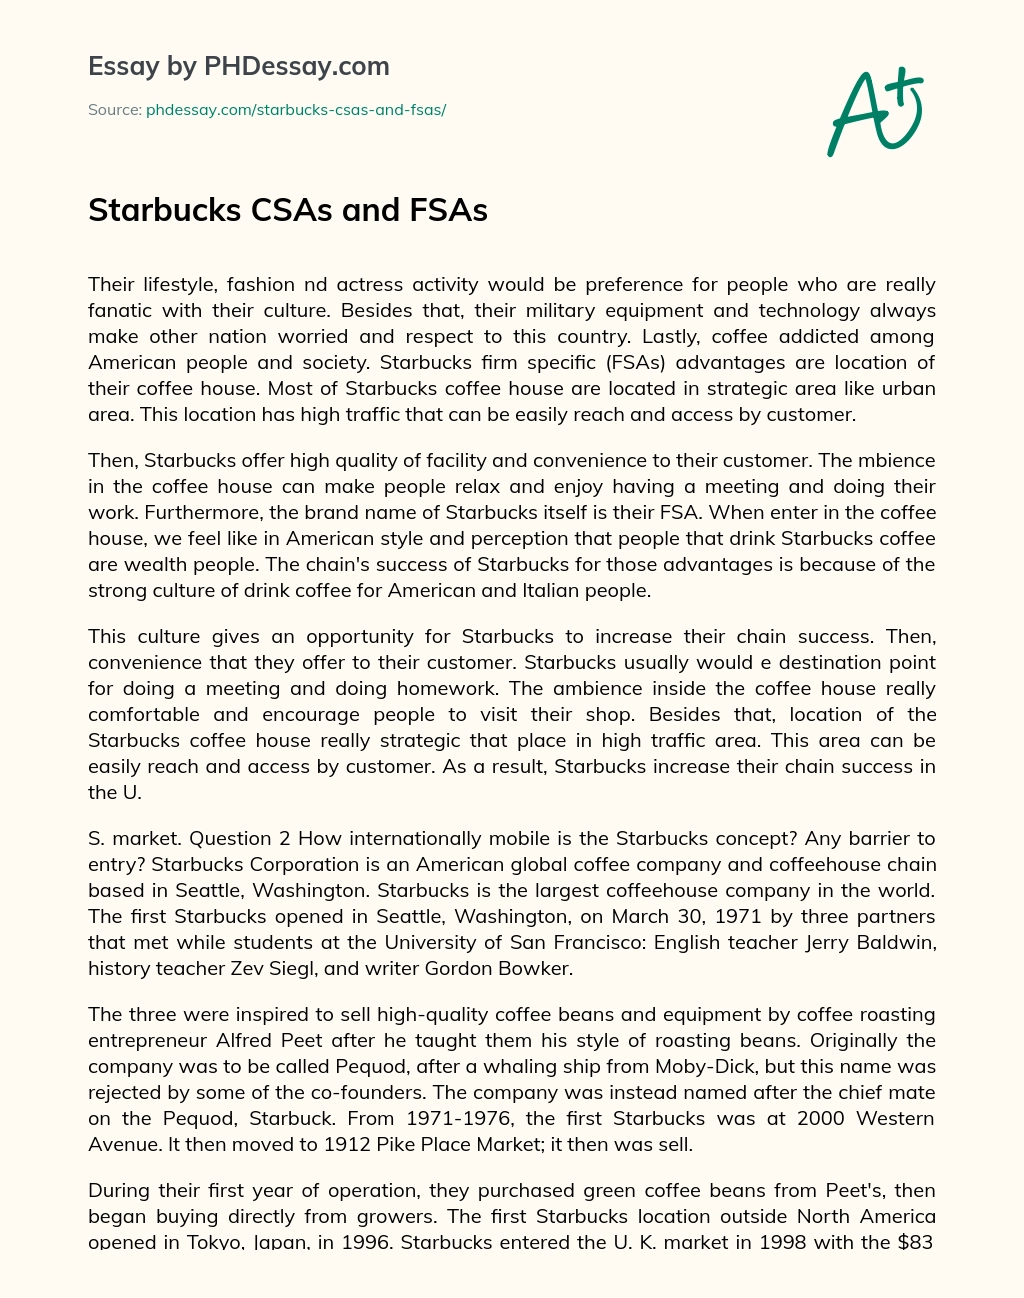 Starbucks CSAs and FSAs essay